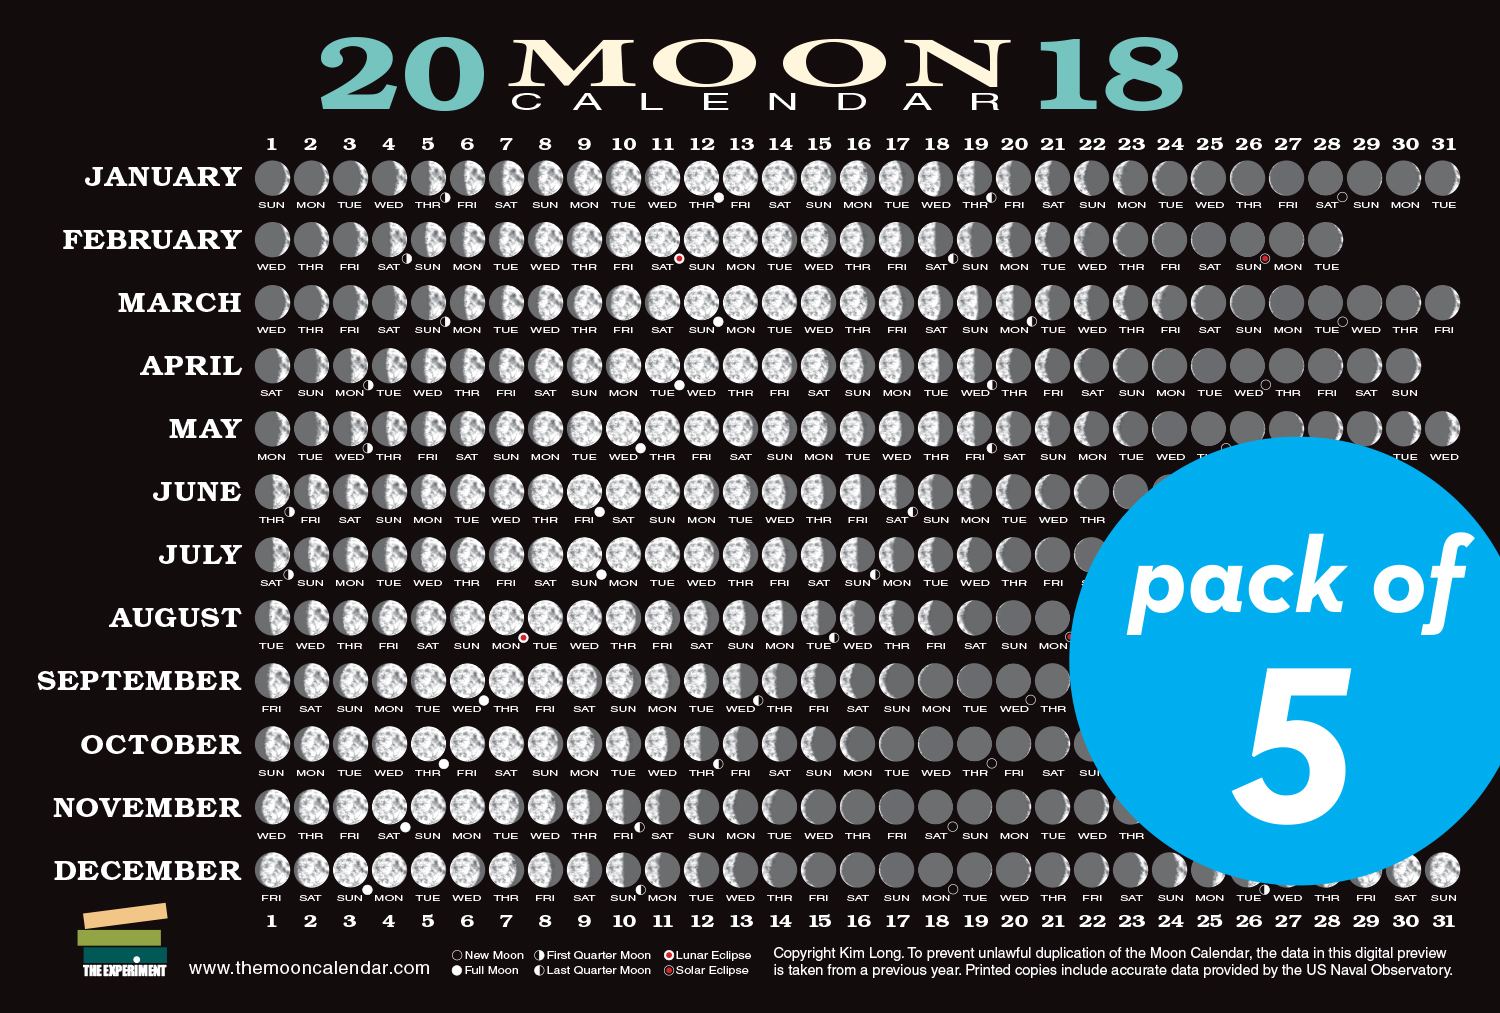 moon haircut calendar 6512366 - dewingerd